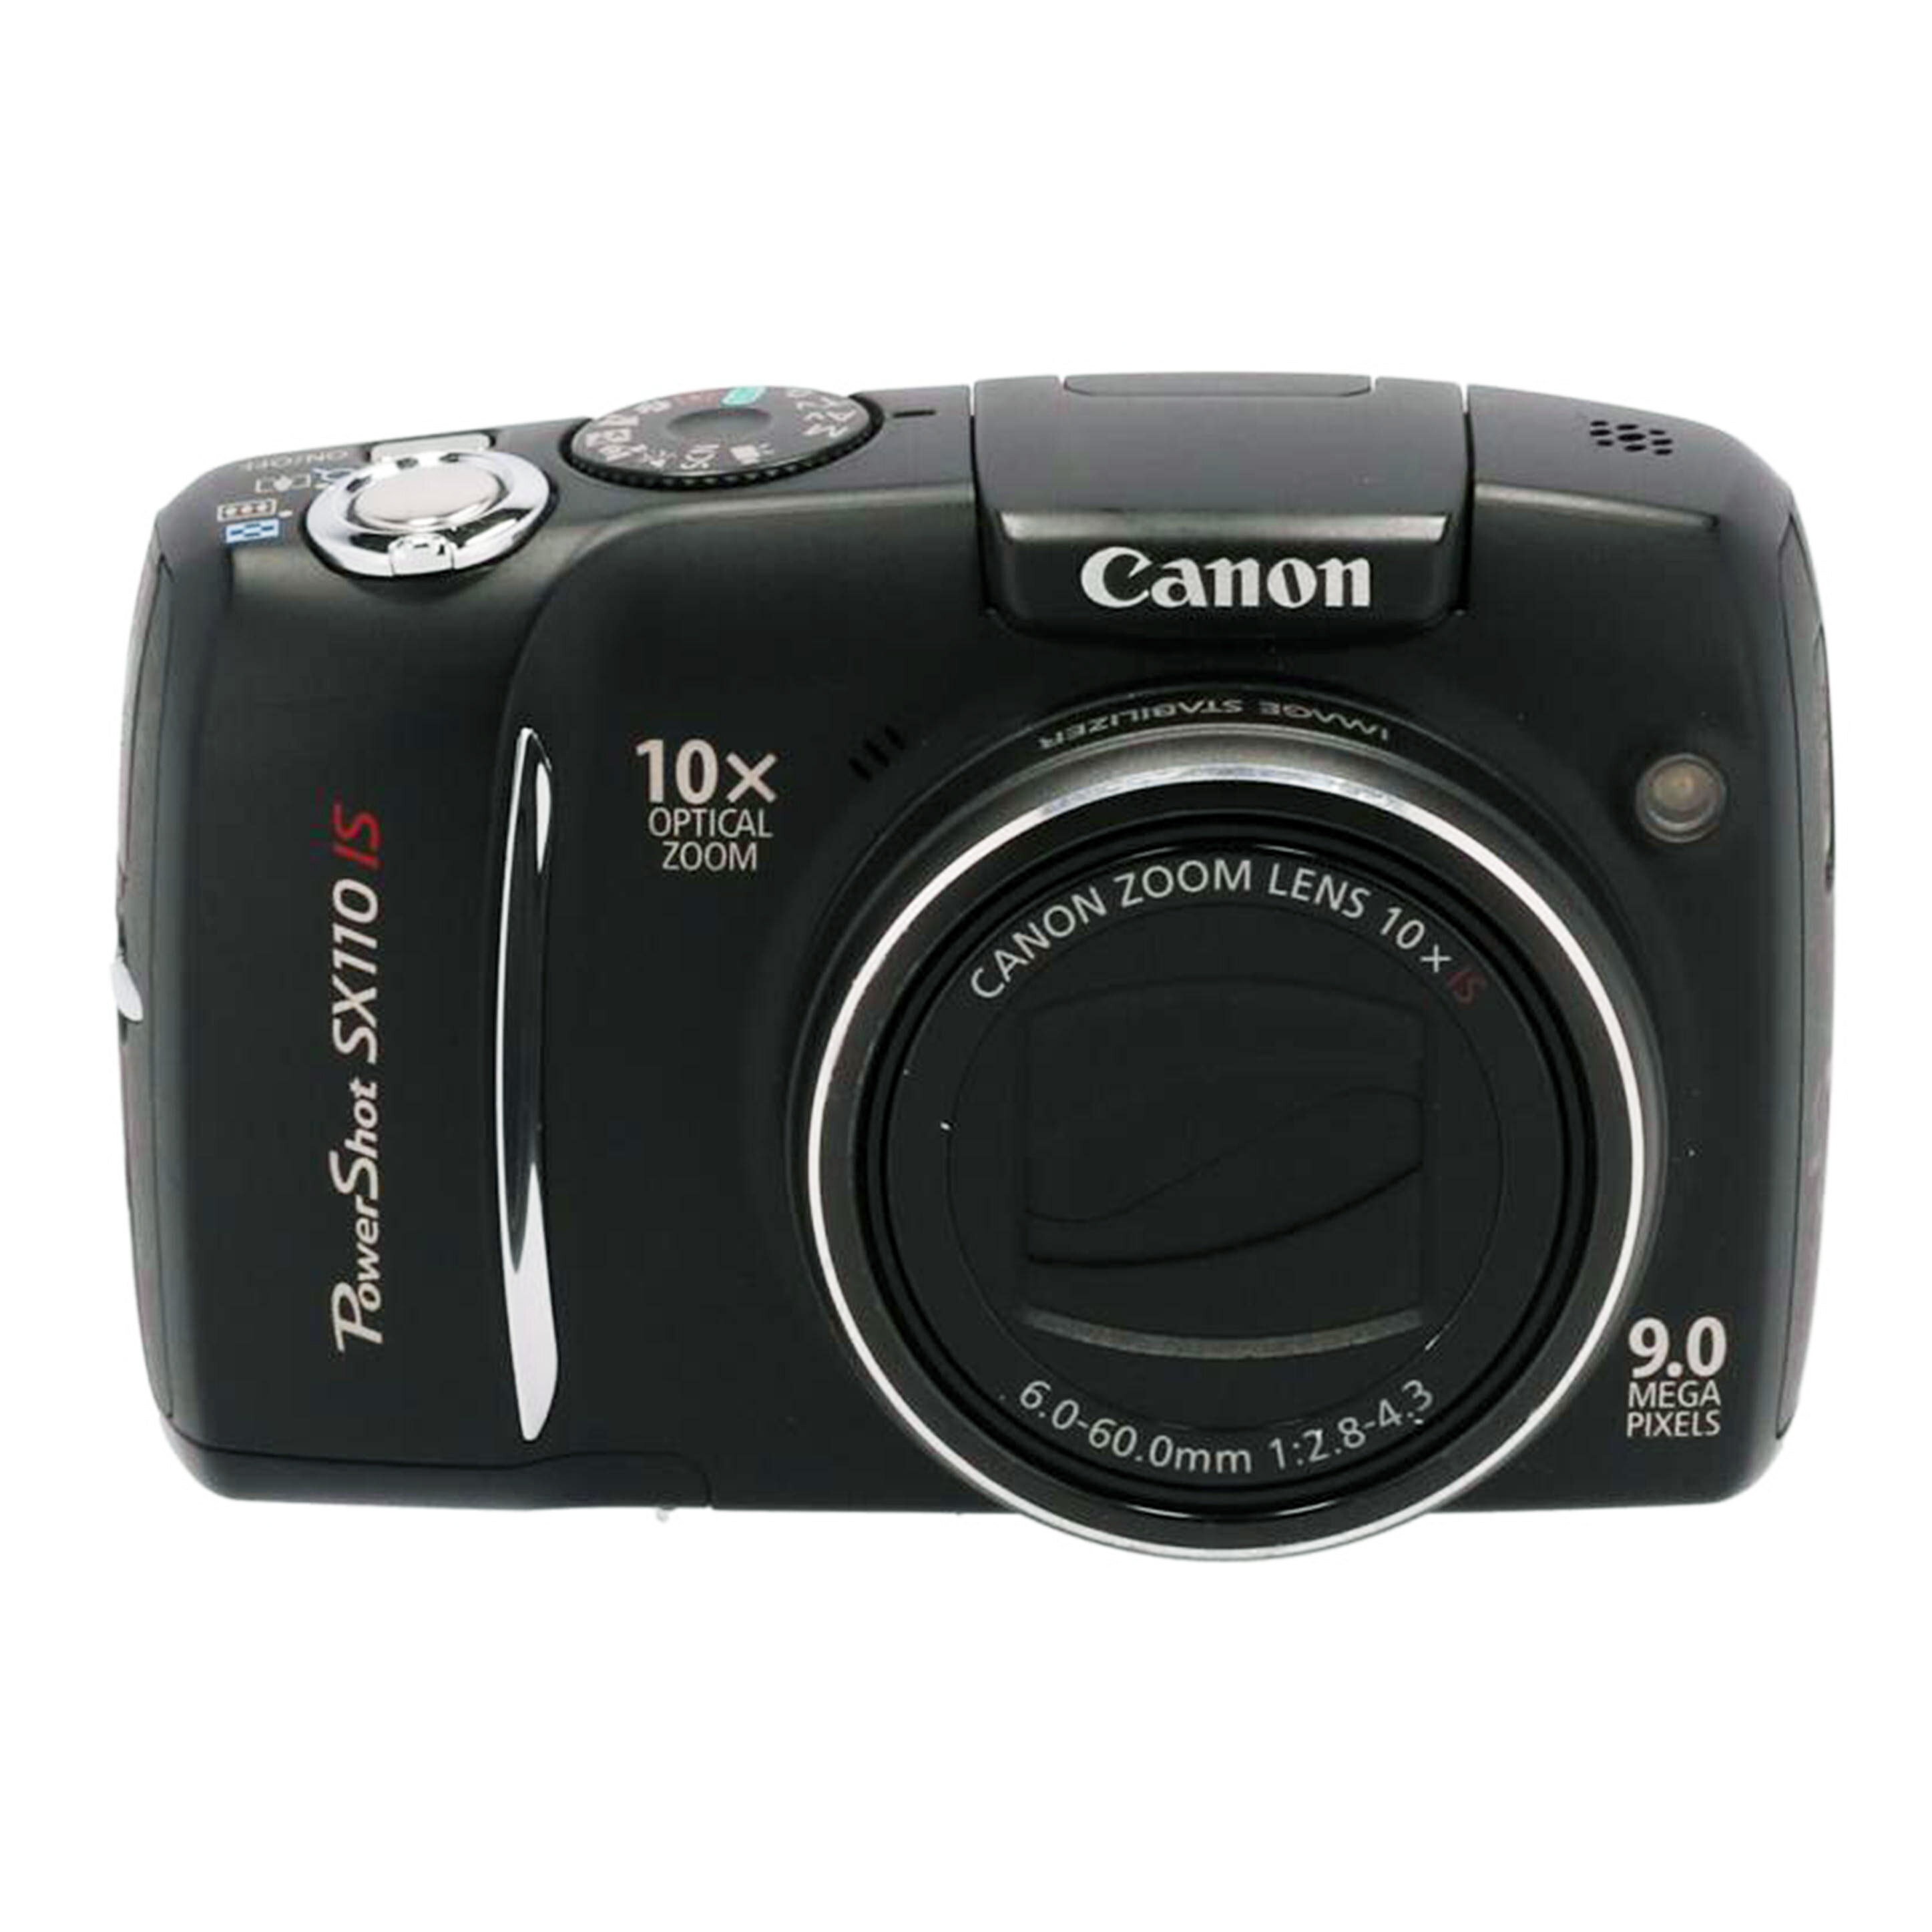 Canon キャノン/デジタルカメラ/PowerShot SX110 IS/Wカメラ/Bランク/85【中古】